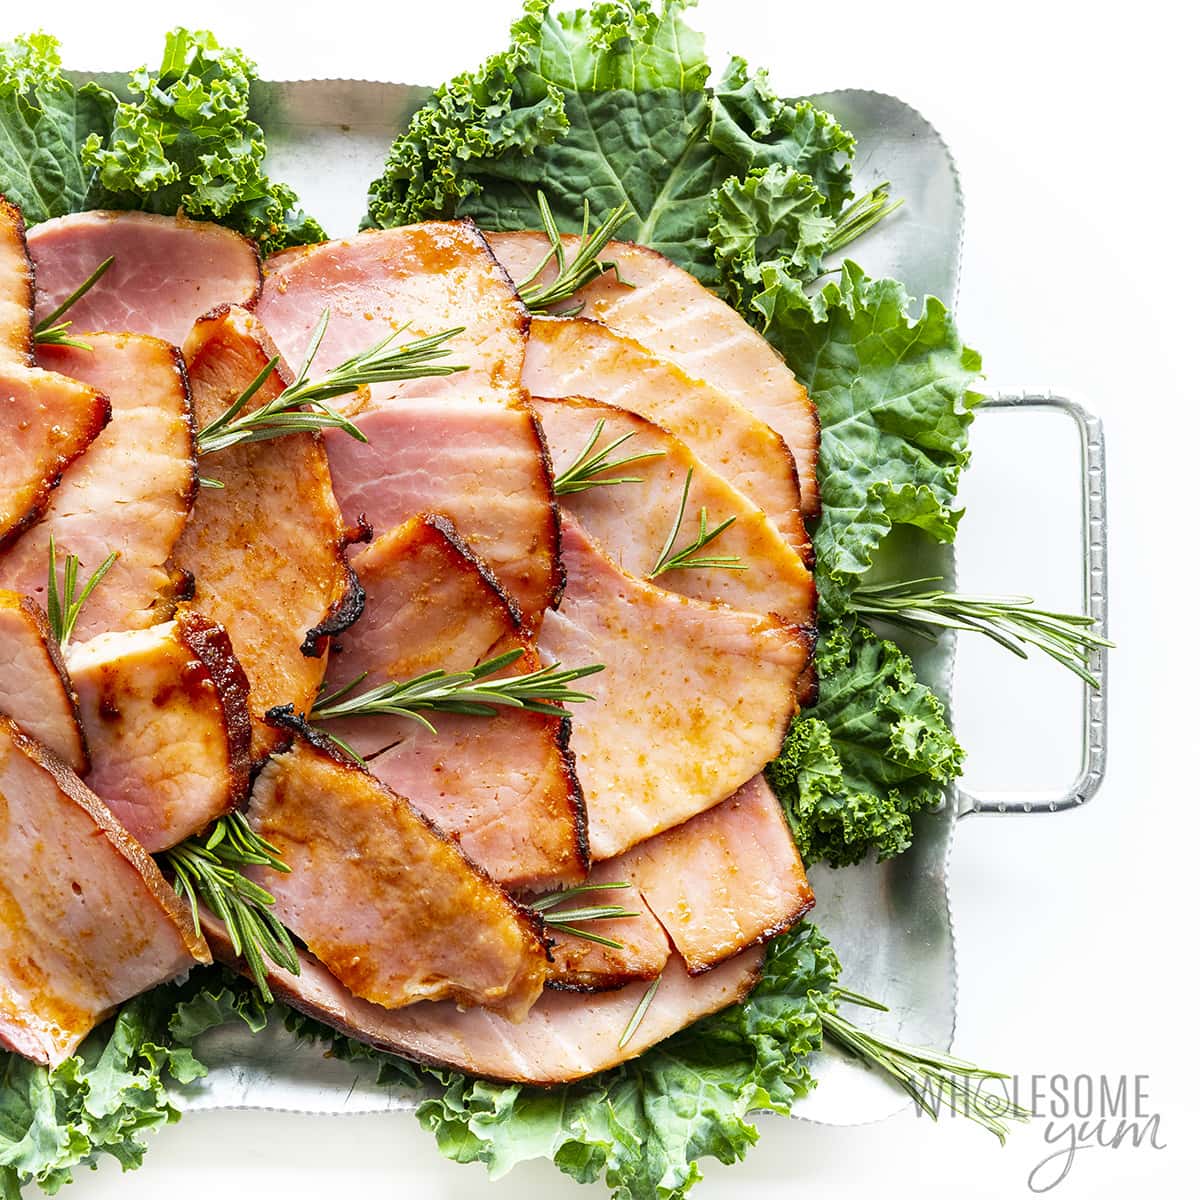 Carved keto friendly ham on a platter.